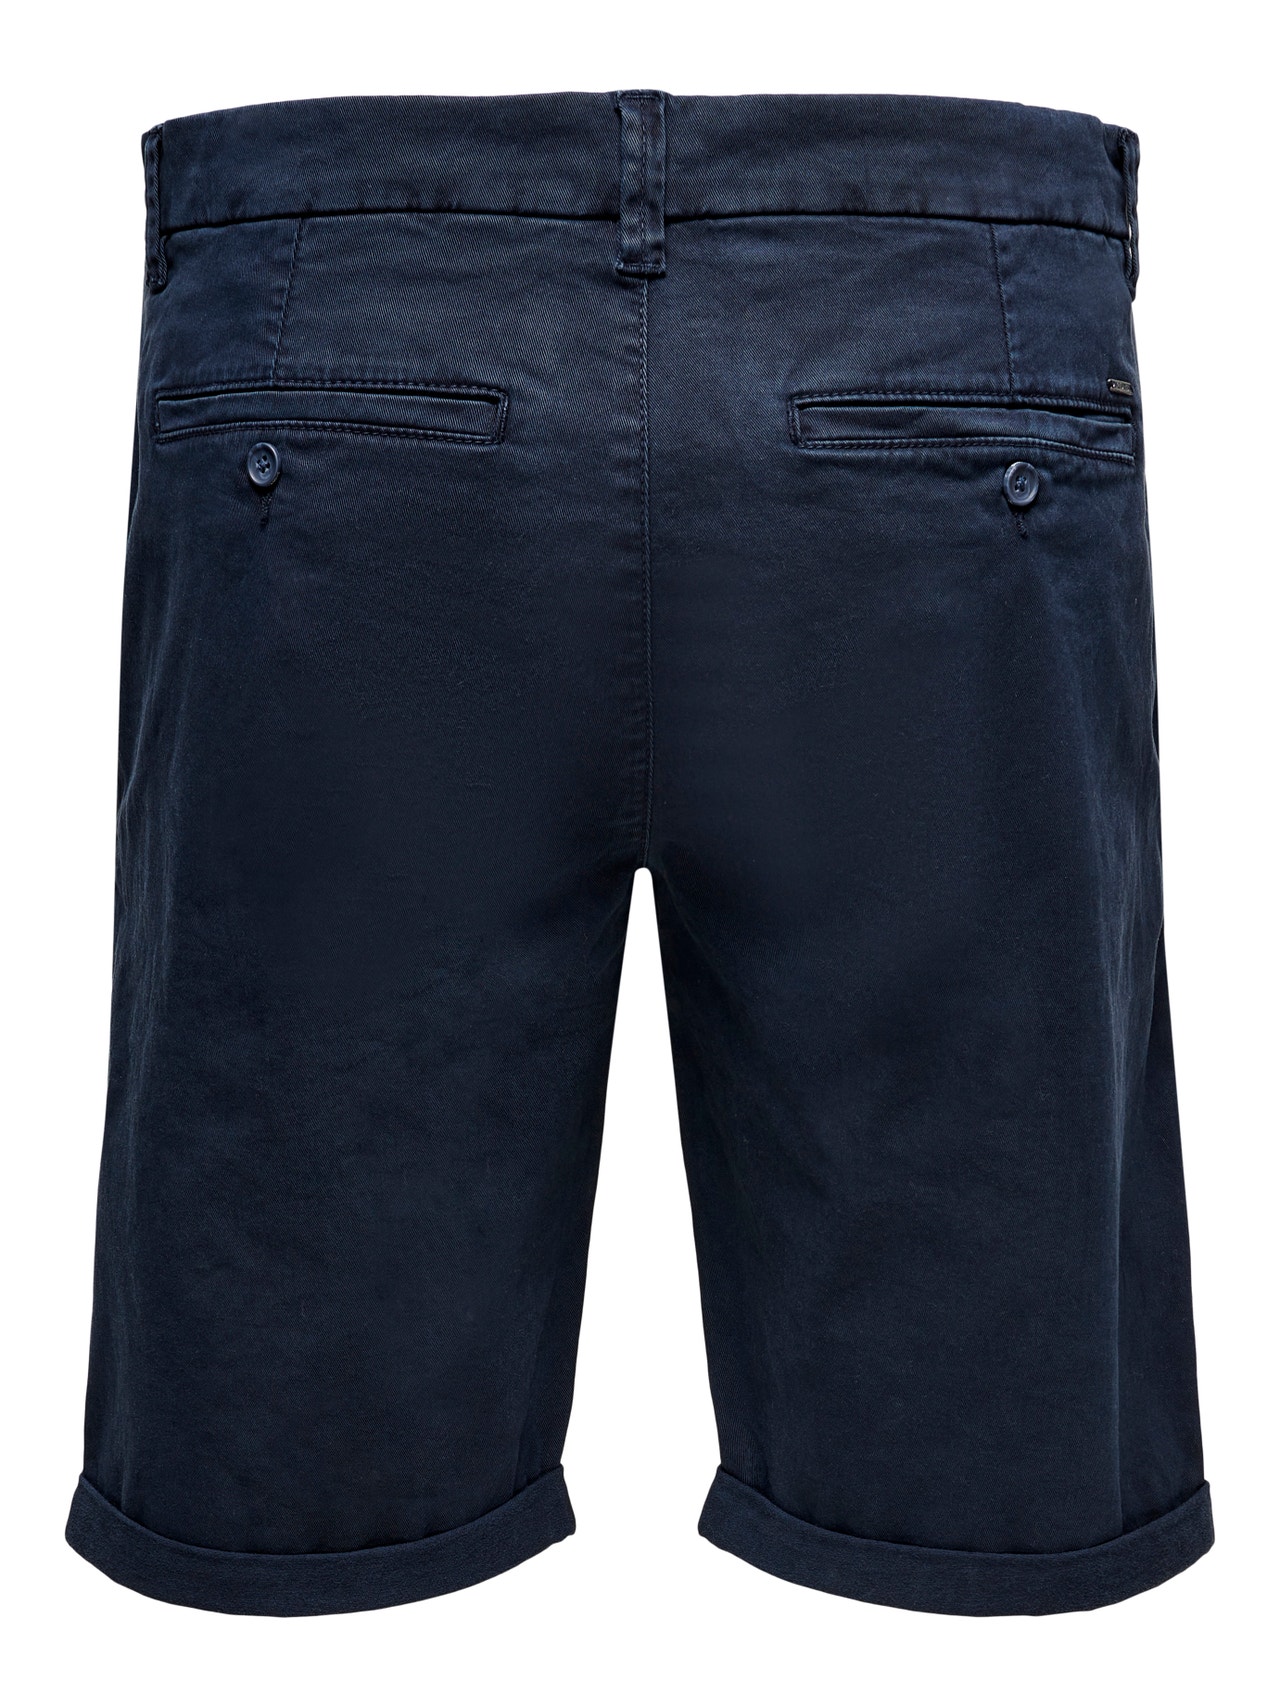 ONLY & SONS Mid waist Shorts -Dark Navy - 22021460